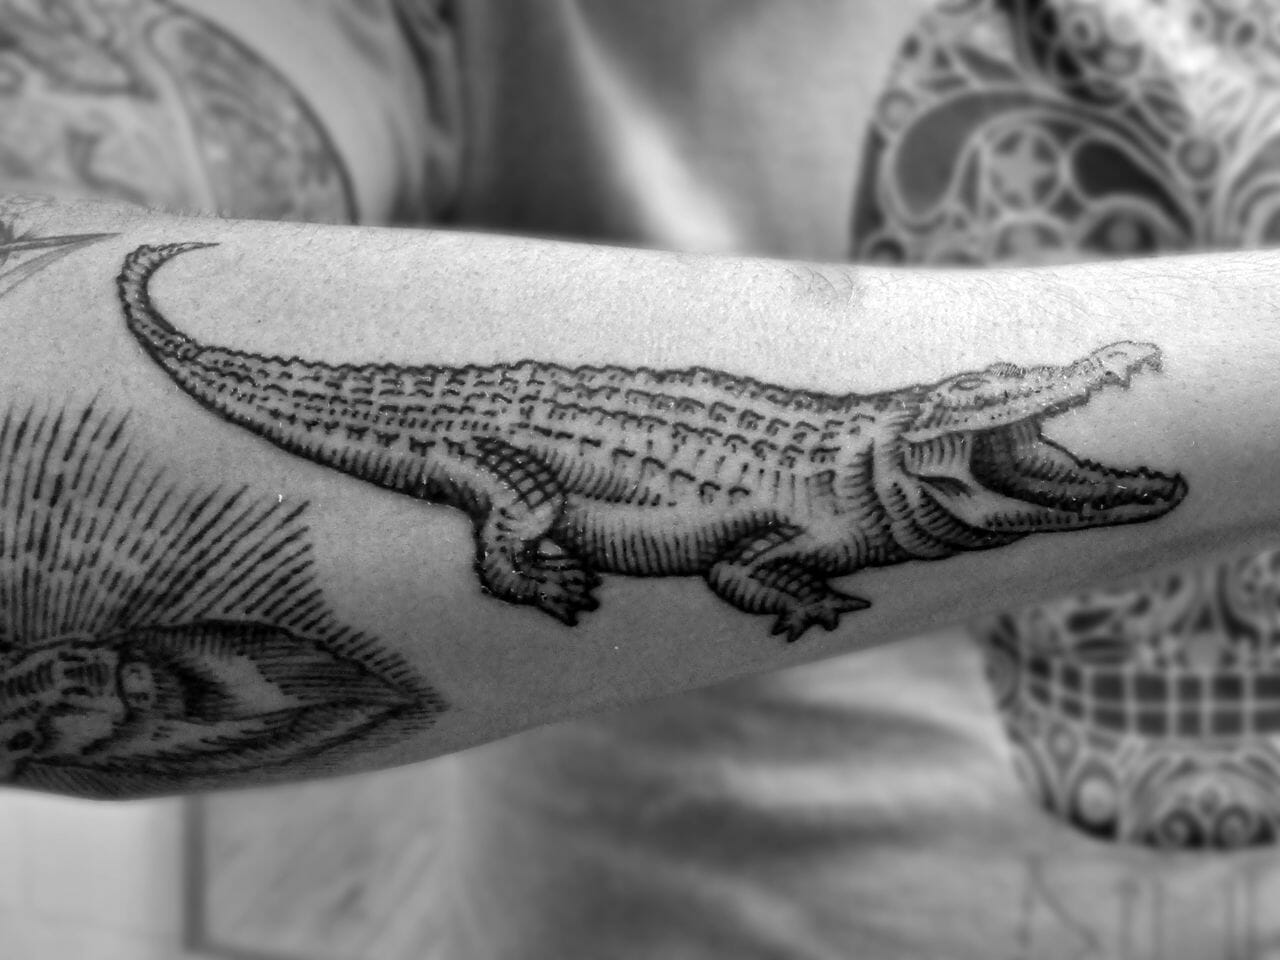 20 Alligator Tattoo Ideas For Men To Try  Styleoholic